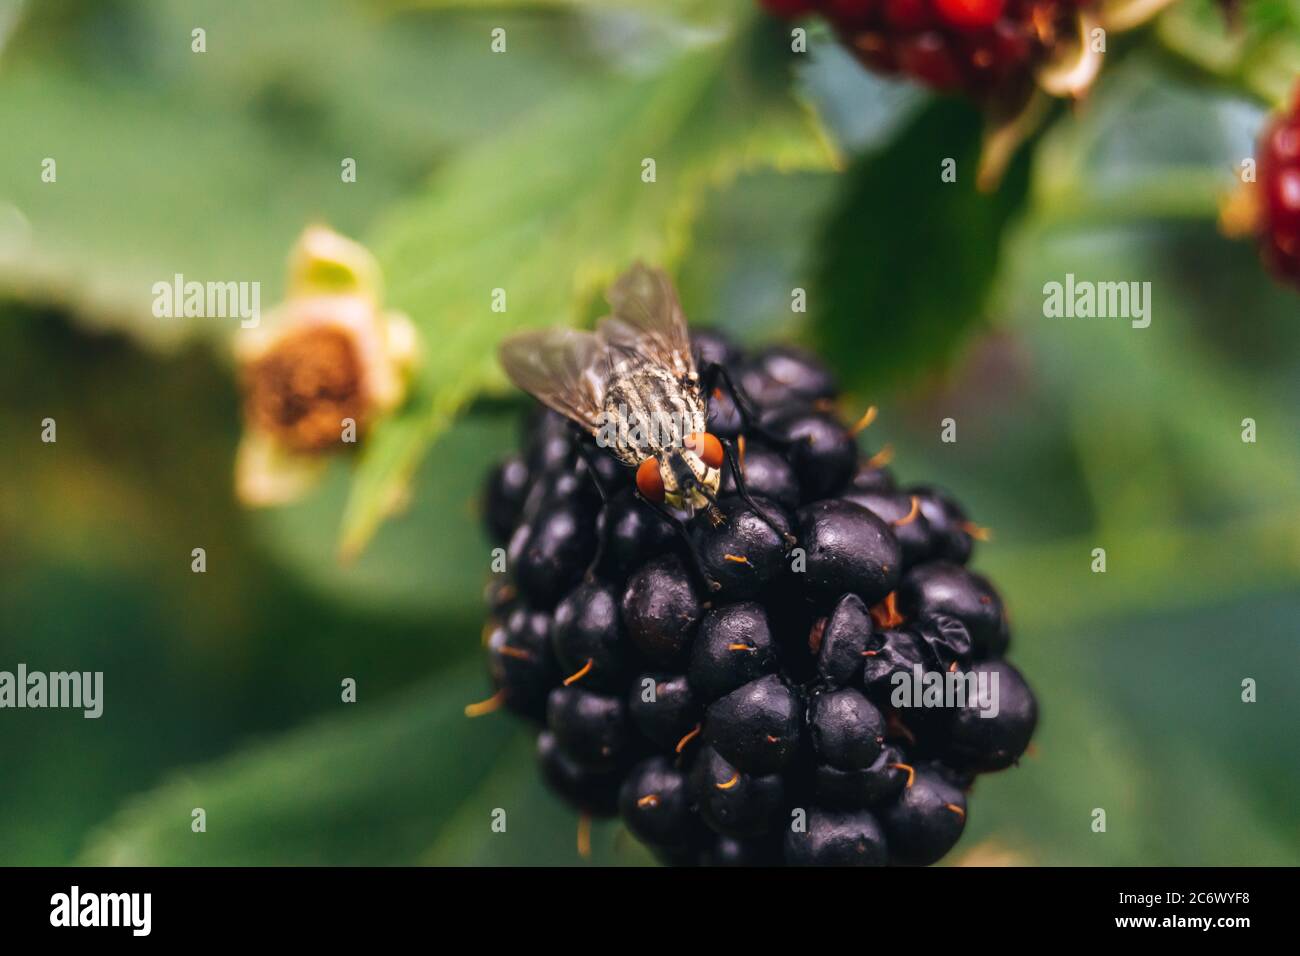 Fruit fly on a blackberry macro shot Stock Photo